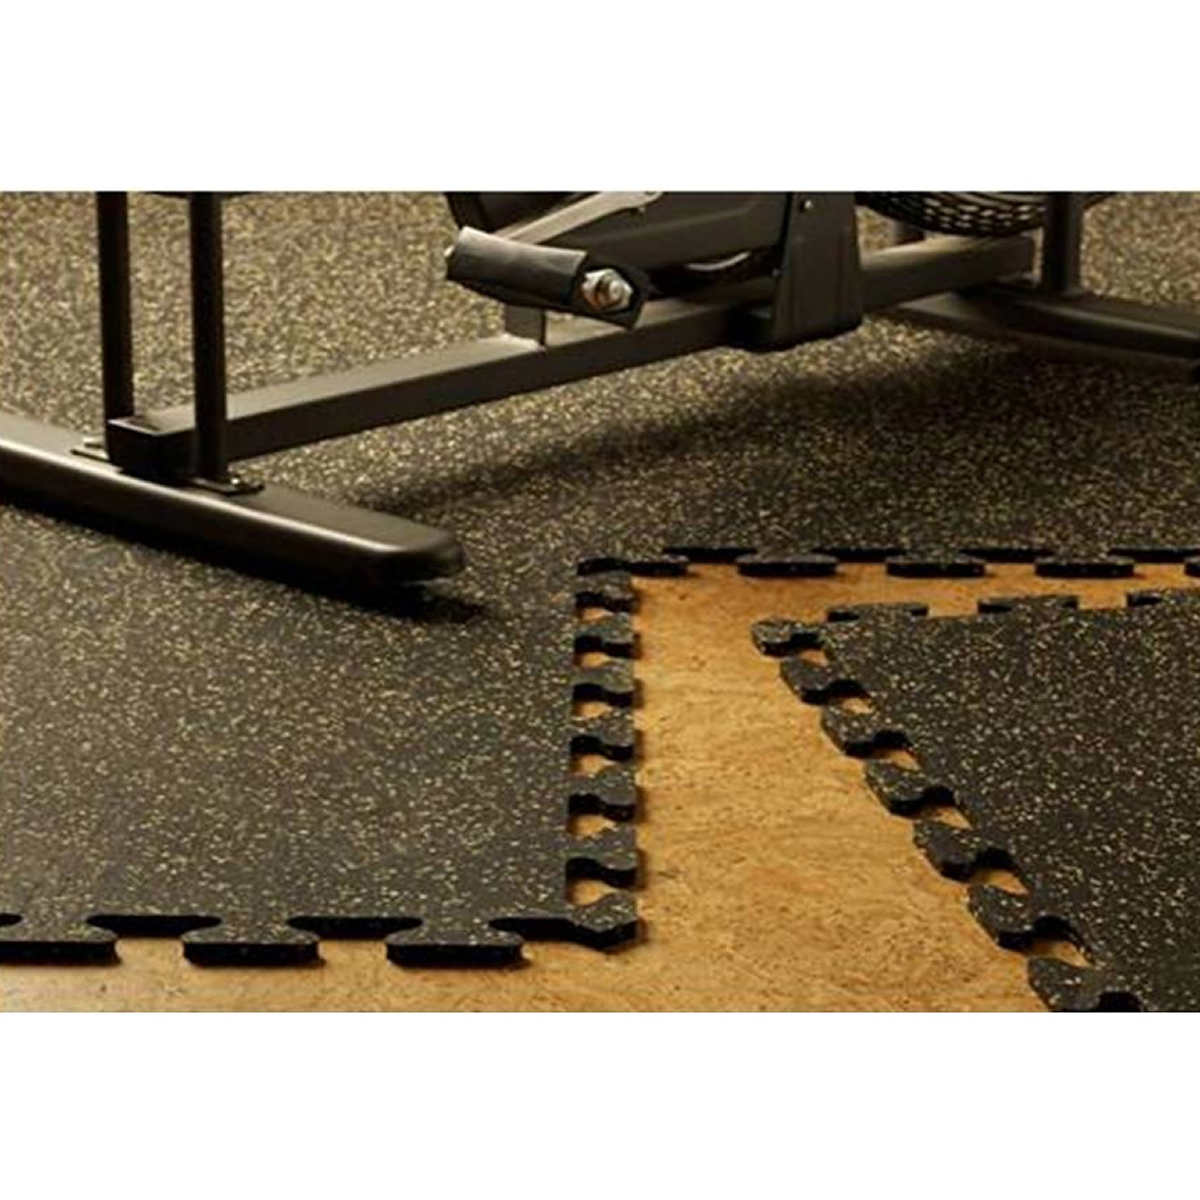 EZ Flex Interlocking Recycled Rubber Floor Tiles by Mats Inc. | Costco